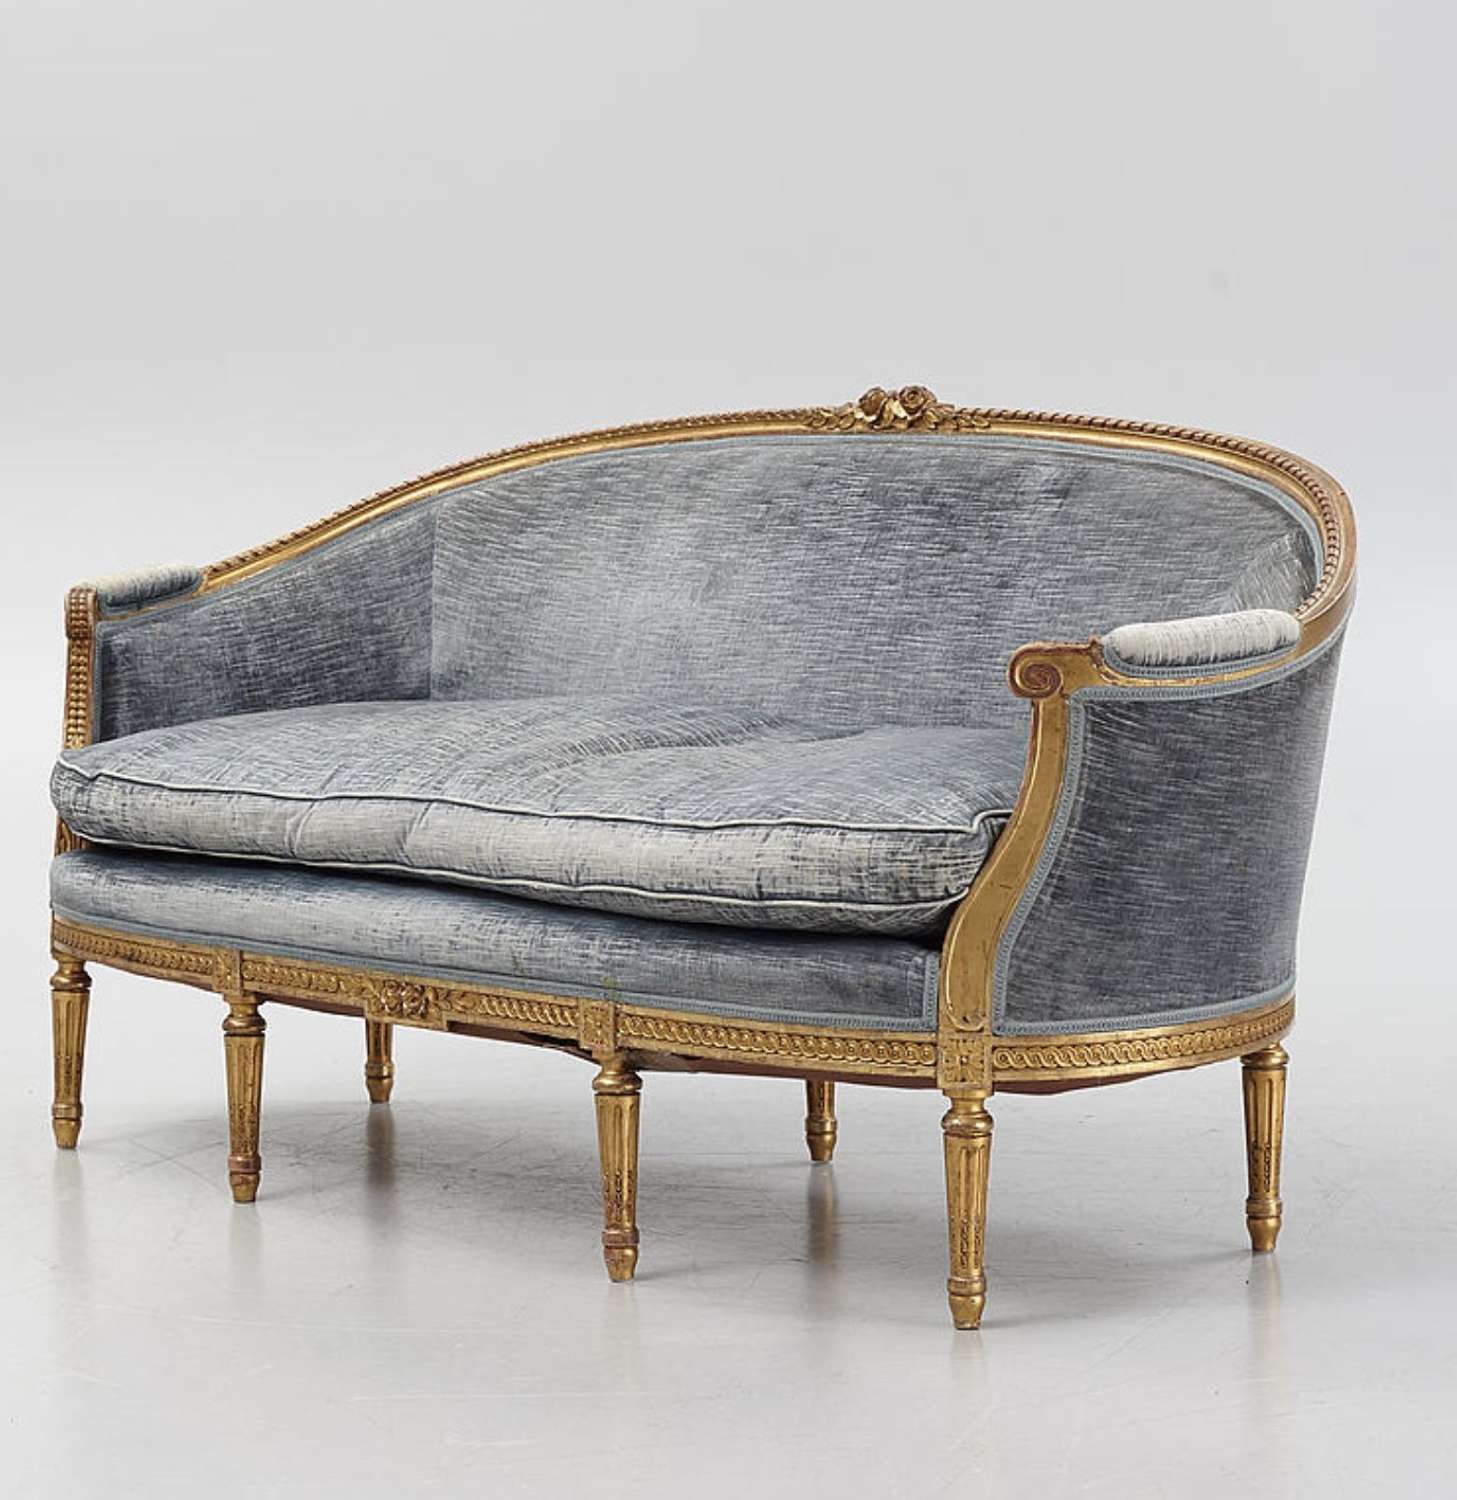 Circa 1900s Swedish Gustavian style gilt sofa